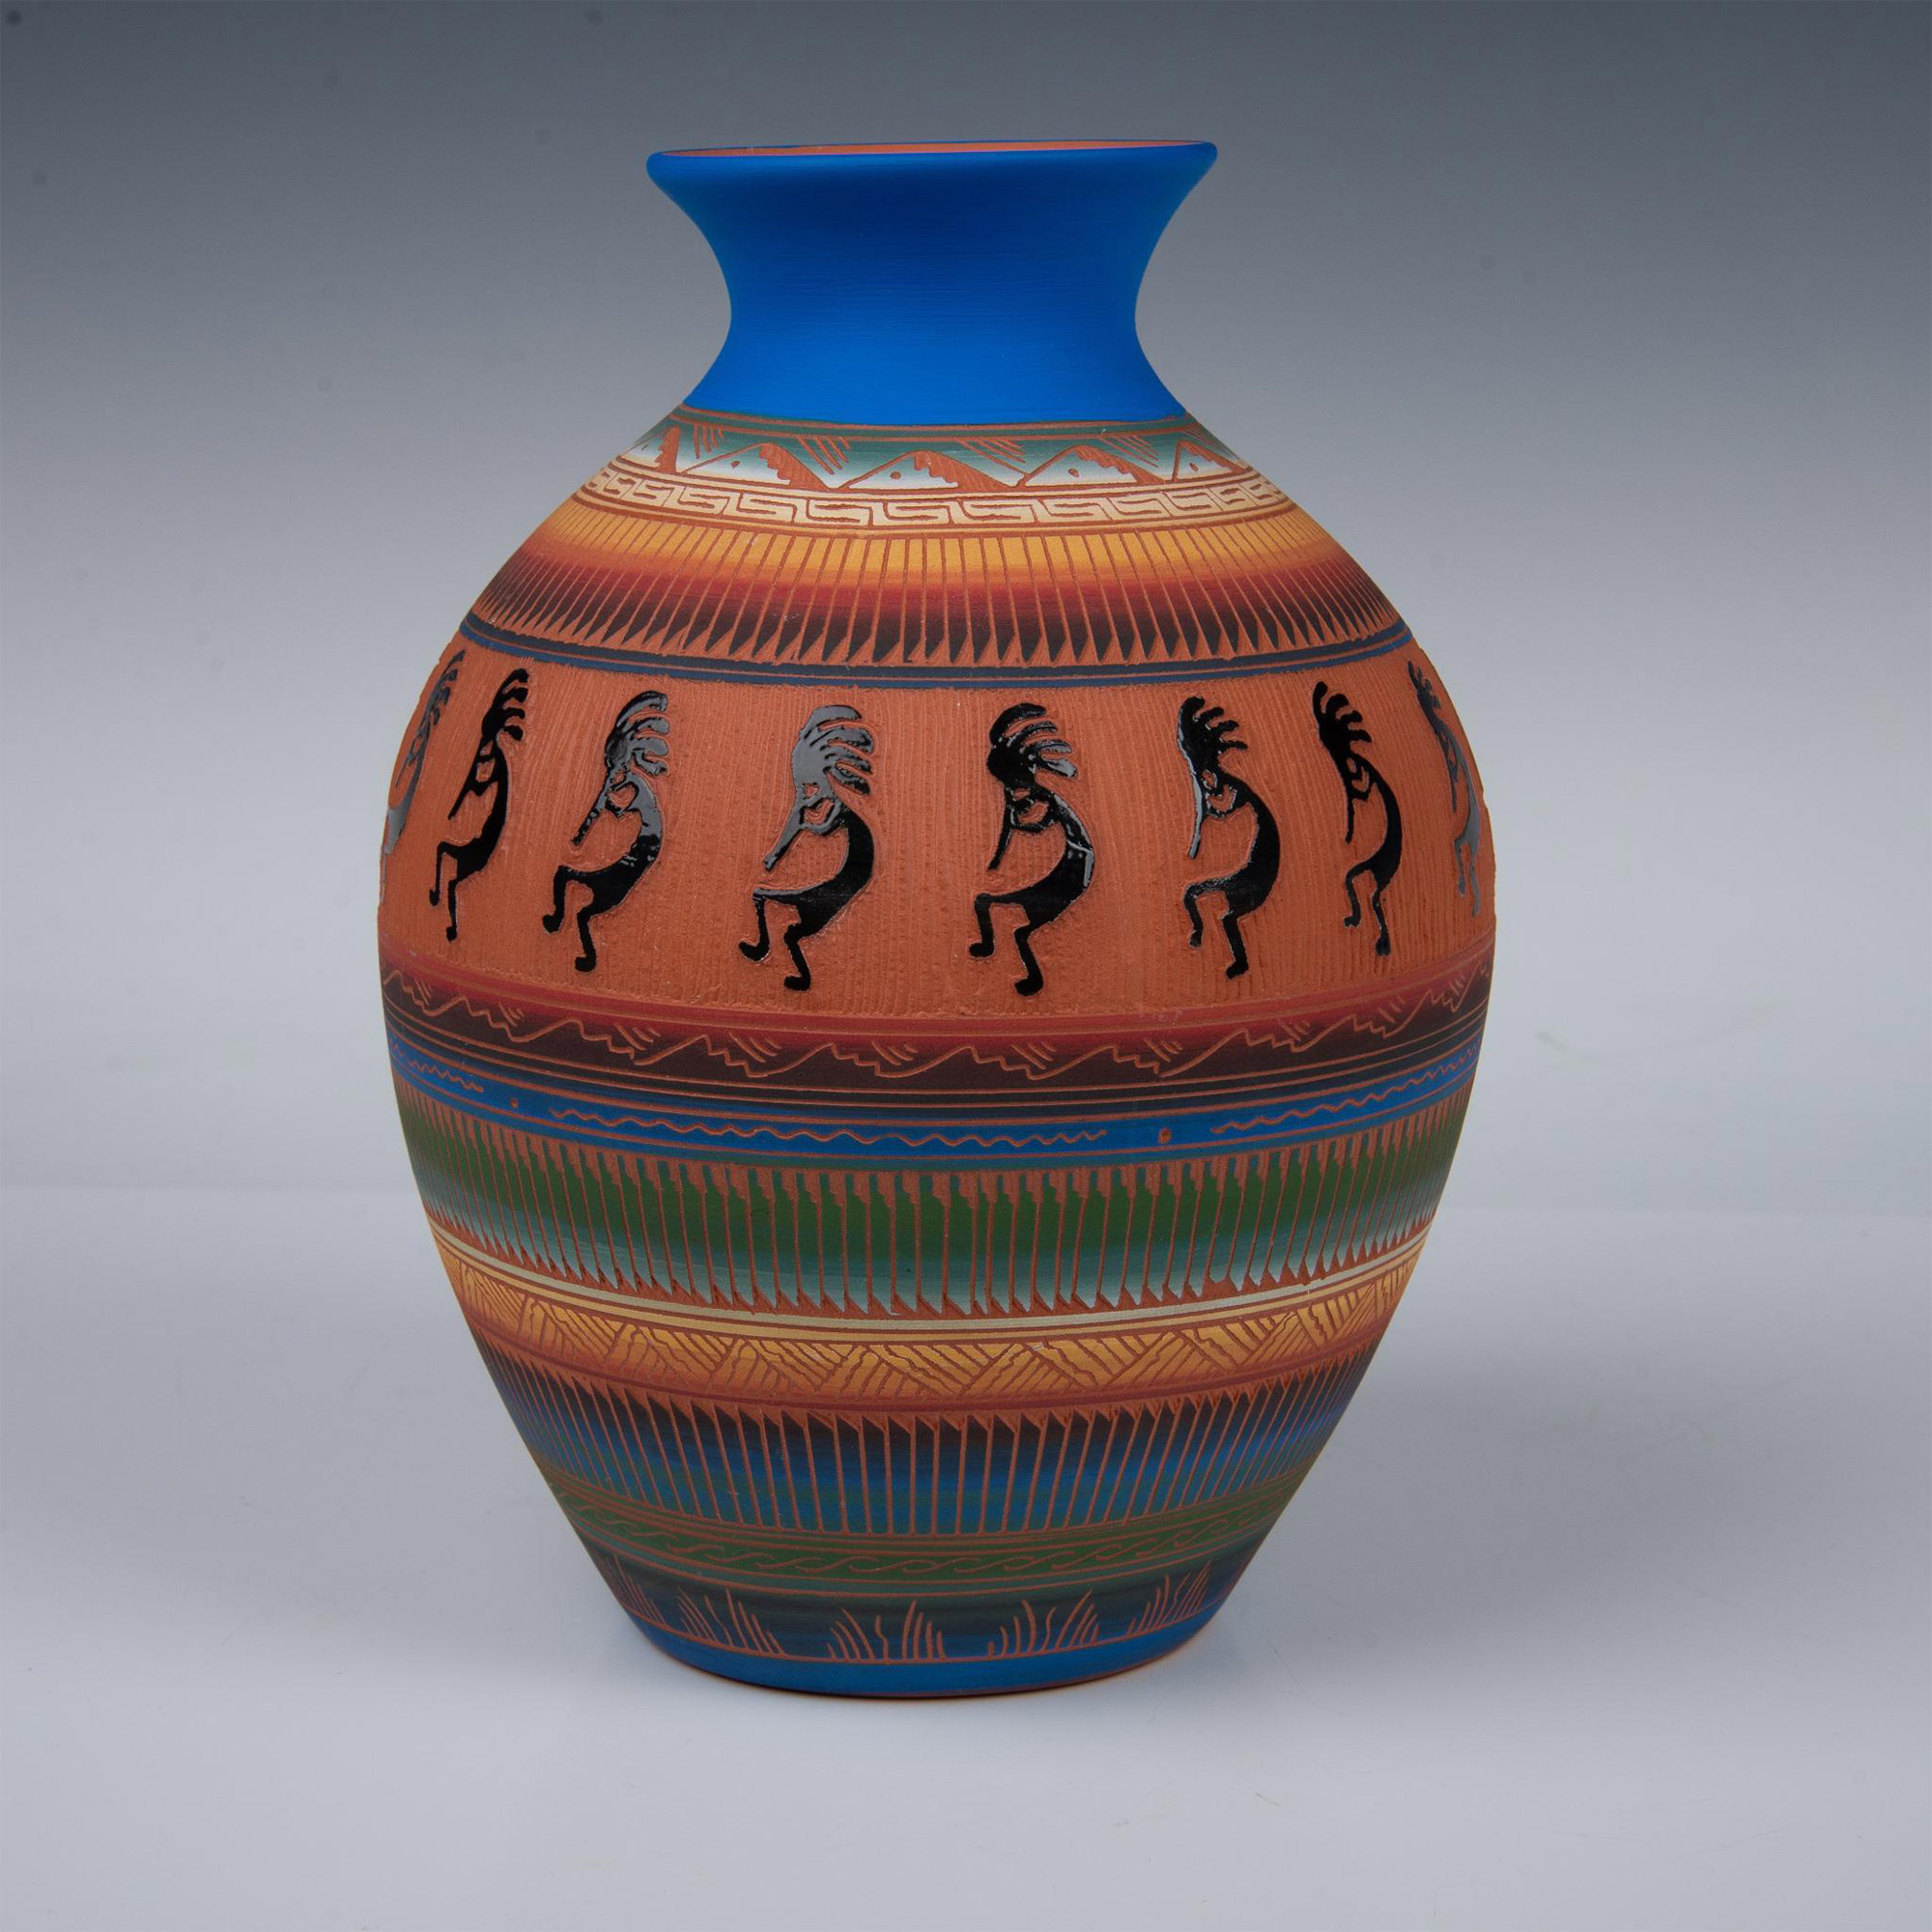 T. Etsitty Navajo Native American Clay Pottery Vase - Image 2 of 4